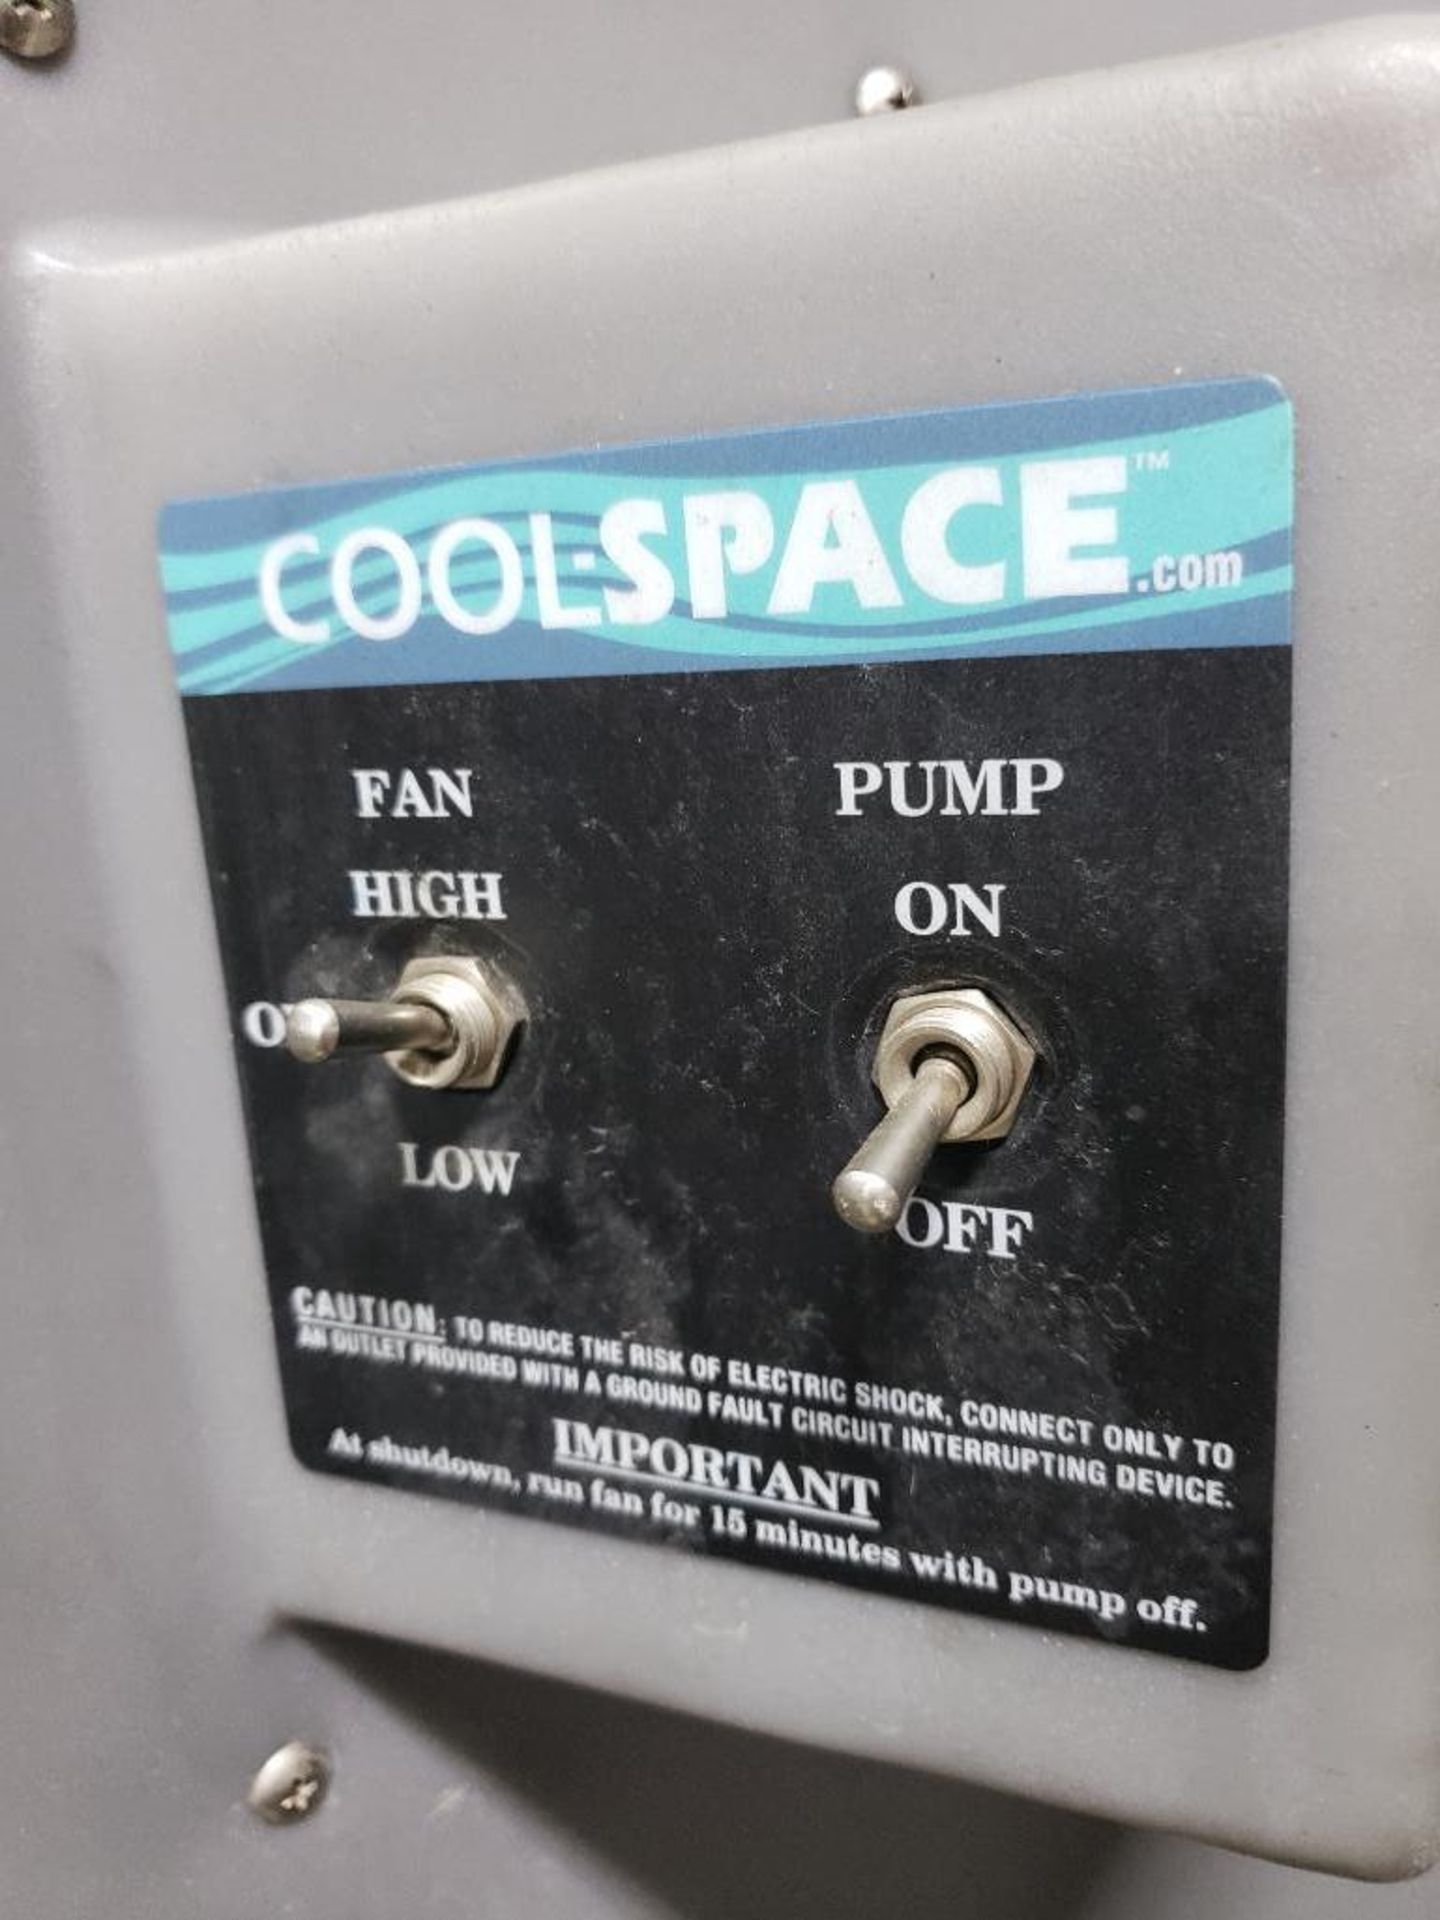 Cool space portable evaporative cooler model CS5-48-2B. single phase 115v. Mfg Date 08/12. - Image 6 of 6